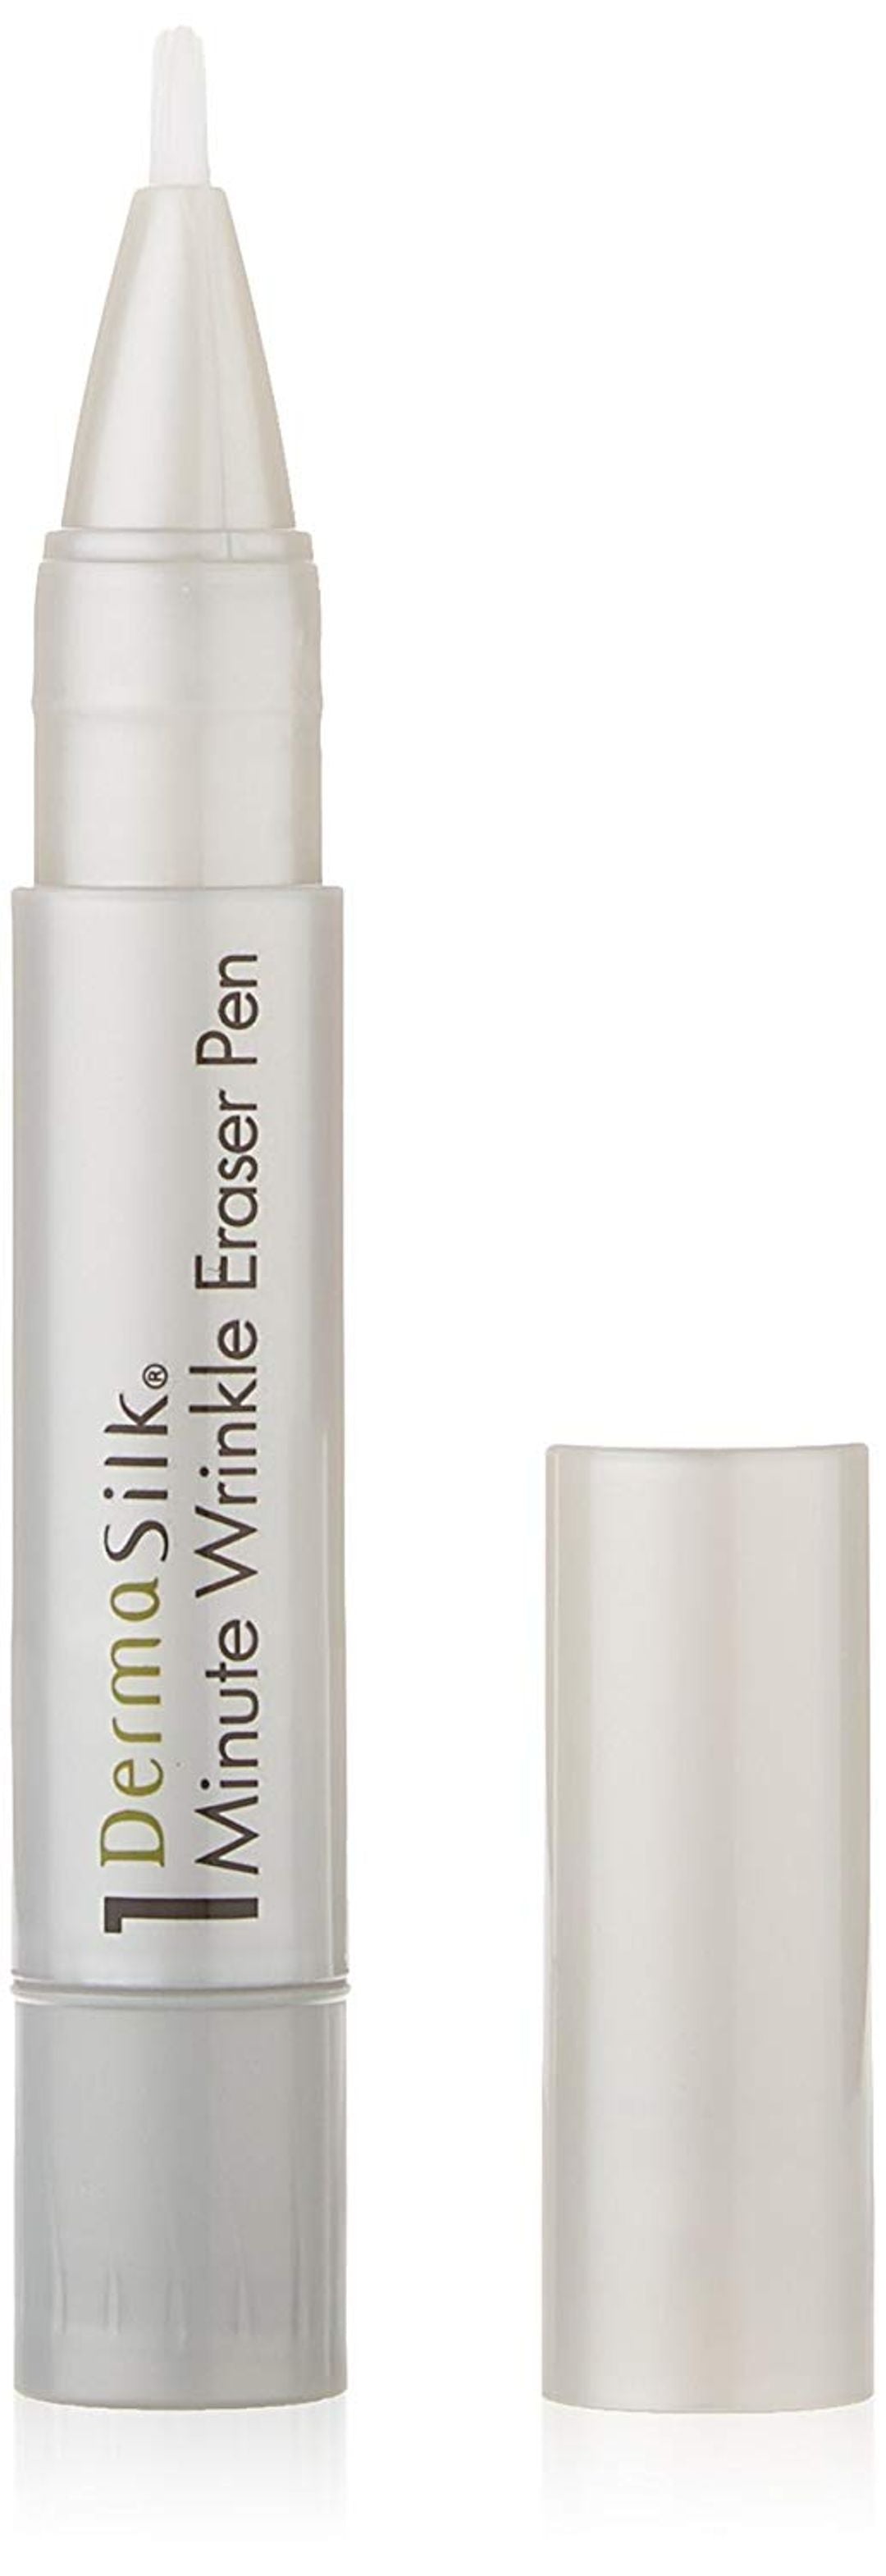 DermaSilk 1 Minute Anti-Wrinkle Complex Erase Pen 0.13 Ounce